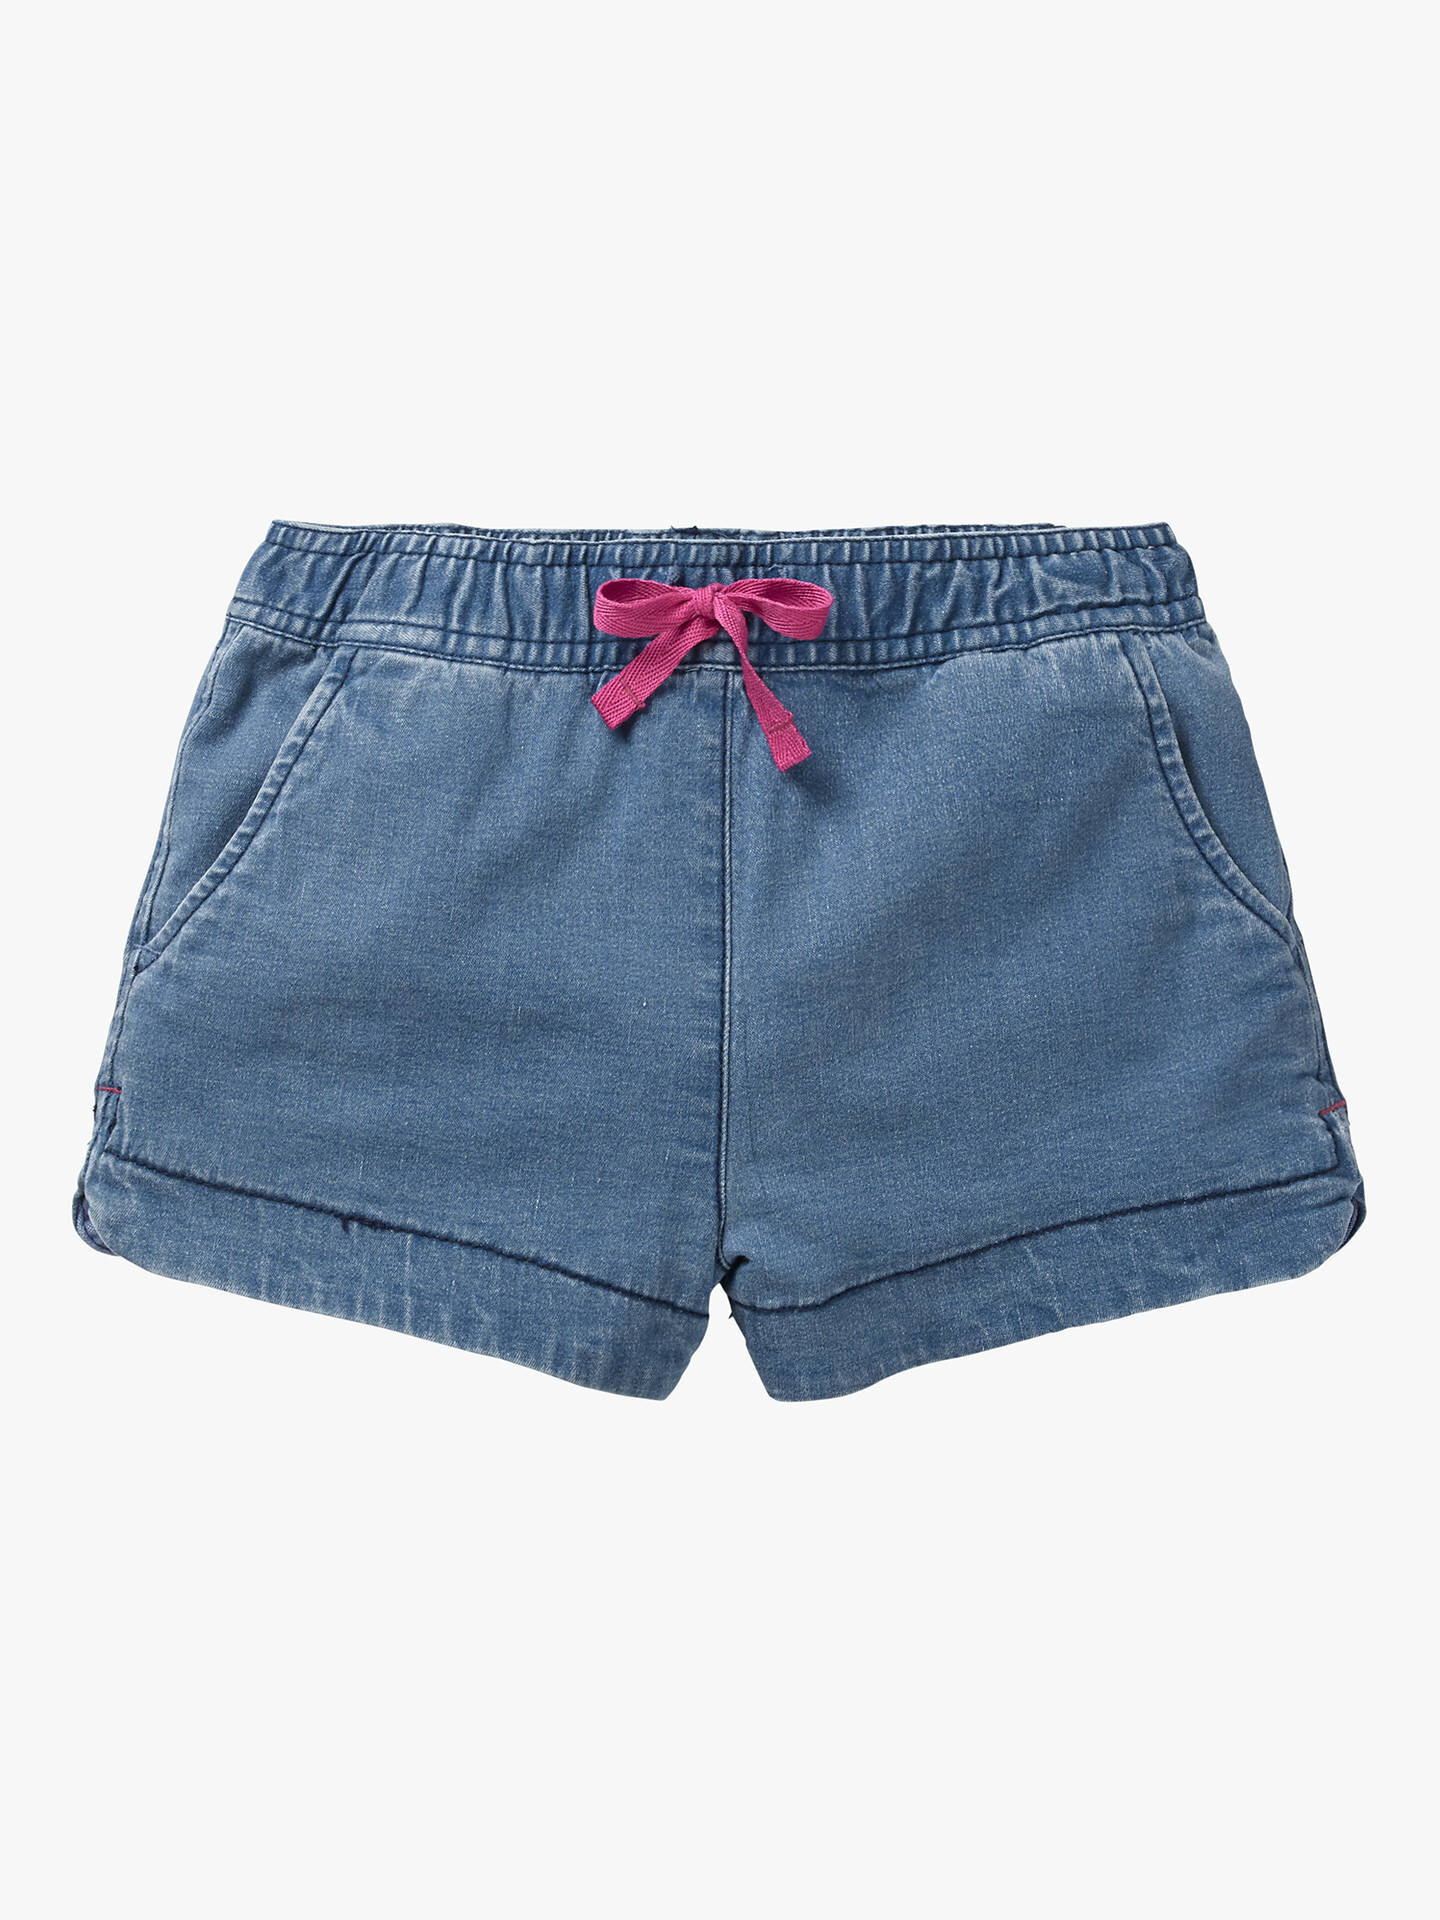 Mini Boden Heart Pocket Shorts in Chambray Blue.jpg